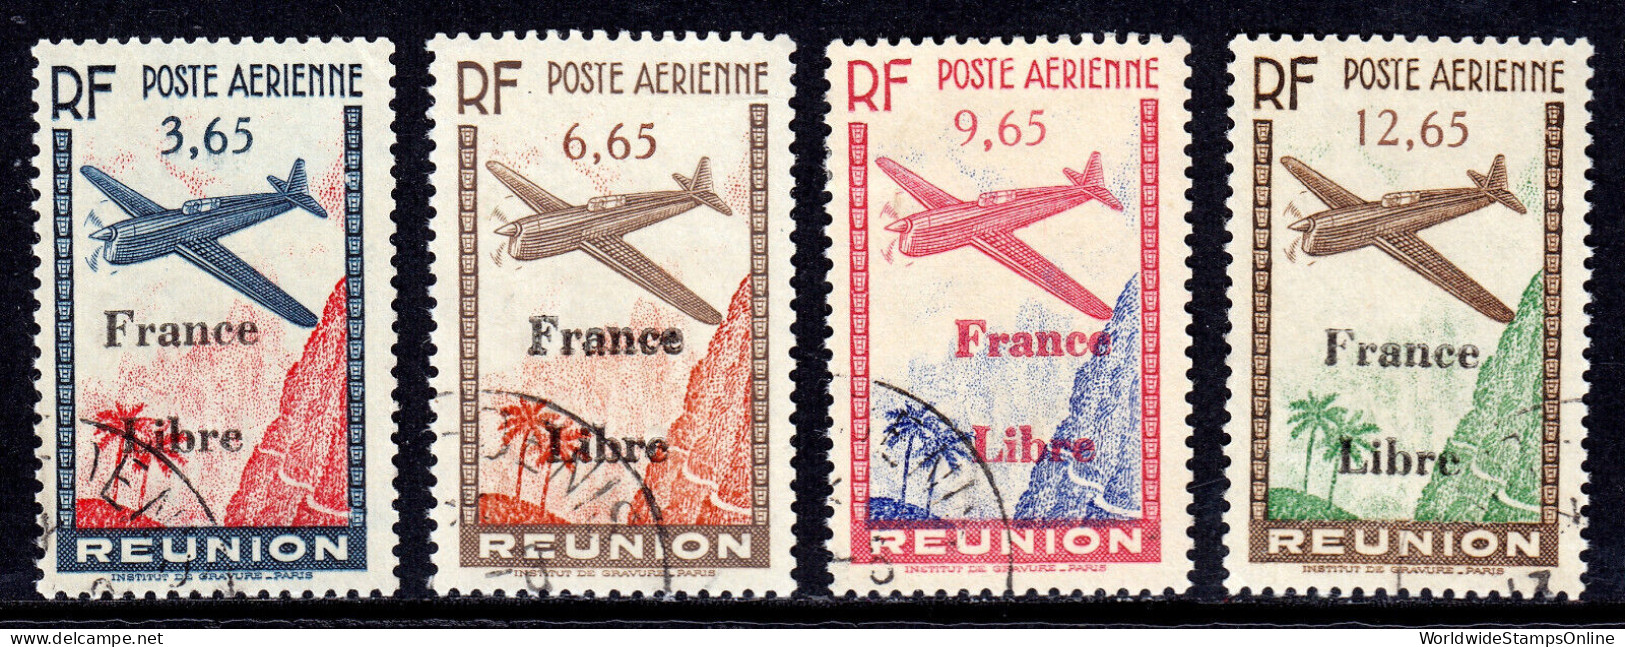 FRANCE (REUNION) — SCOTT C14-C17 — 1943 FRANCE LIBRE AIRMAIL SET— USED — SCV $22 - Posta Aerea